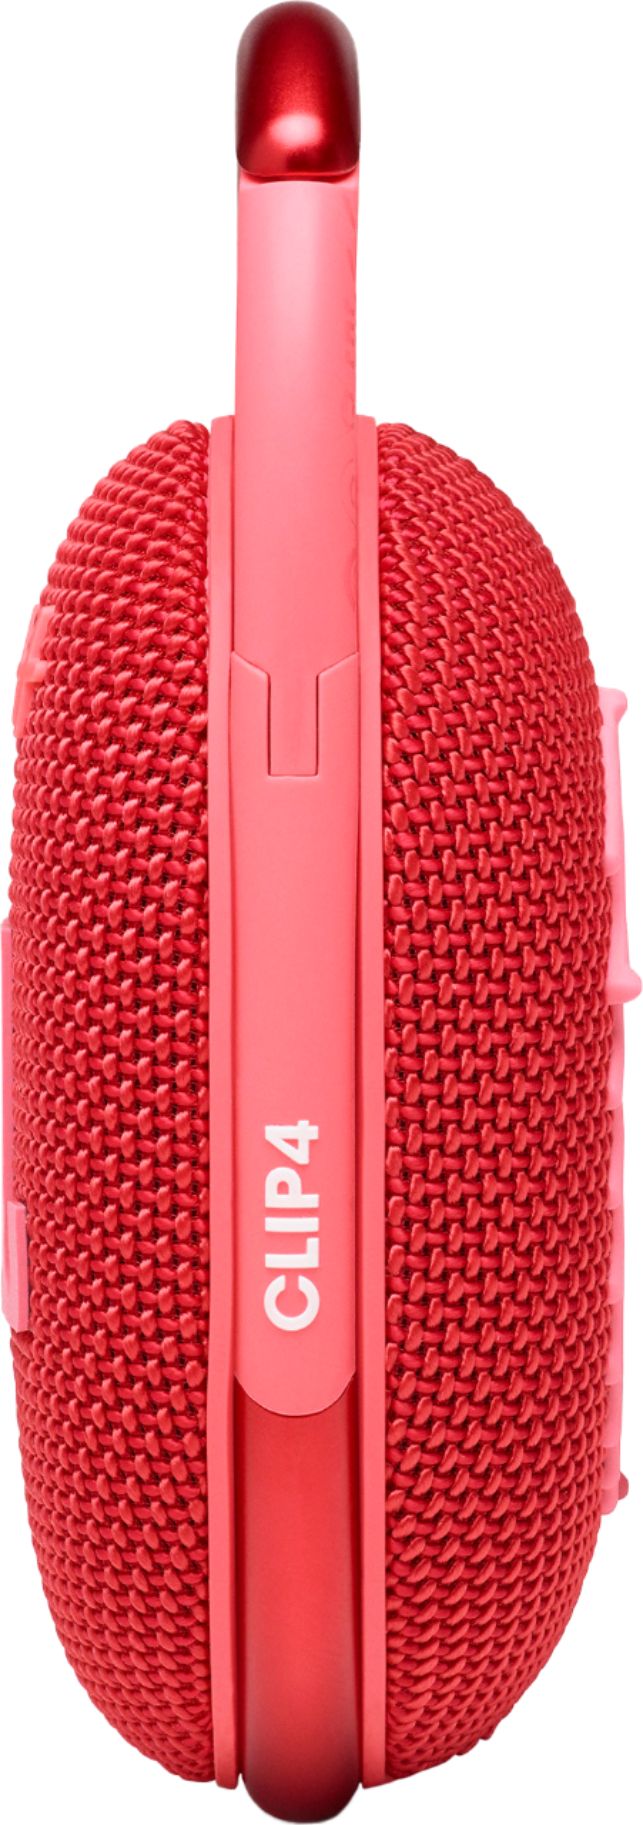 JBL Lifestyle Clip 4 Portable Waterproof Bluetooth Speaker - Red